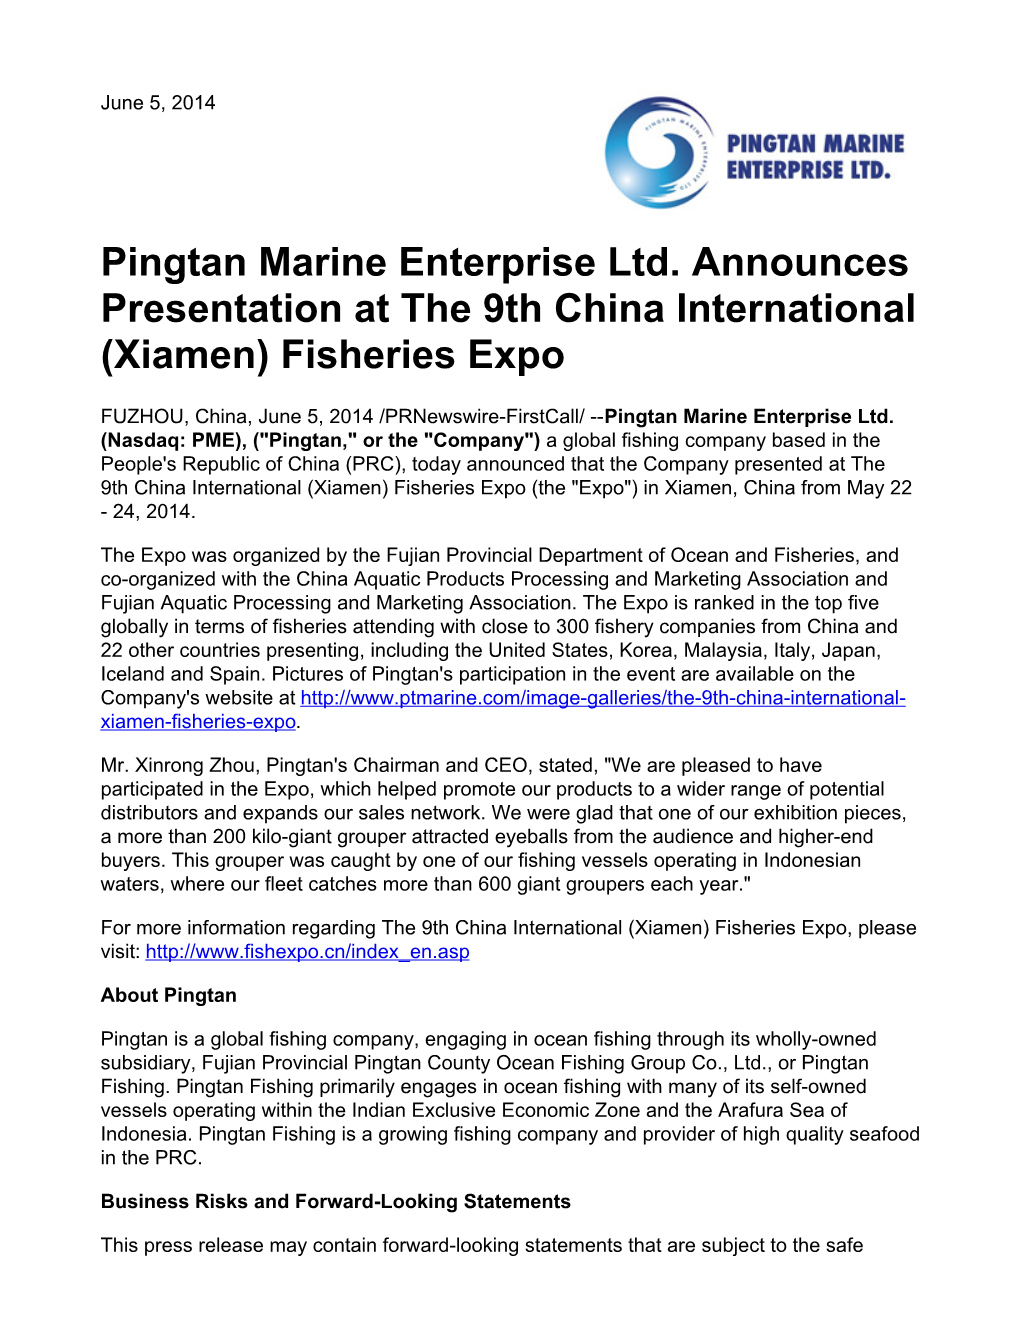 Pingtan Marine Enterprise Ltd. Announces Presentation at the 9Th China International (Xiamen) Fisheries Expo